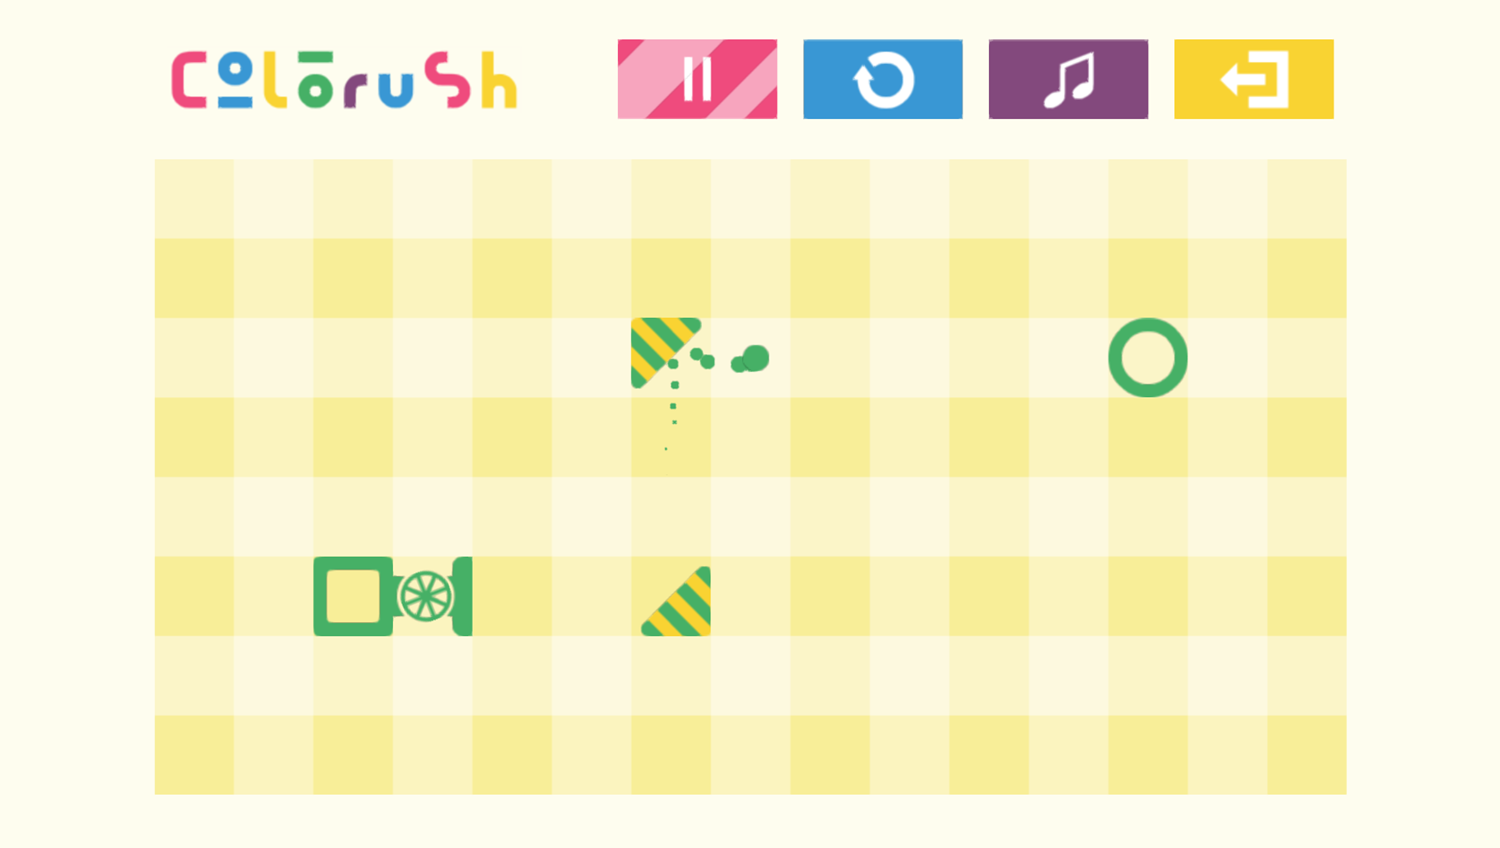 Colorush Game Play Screenshot.